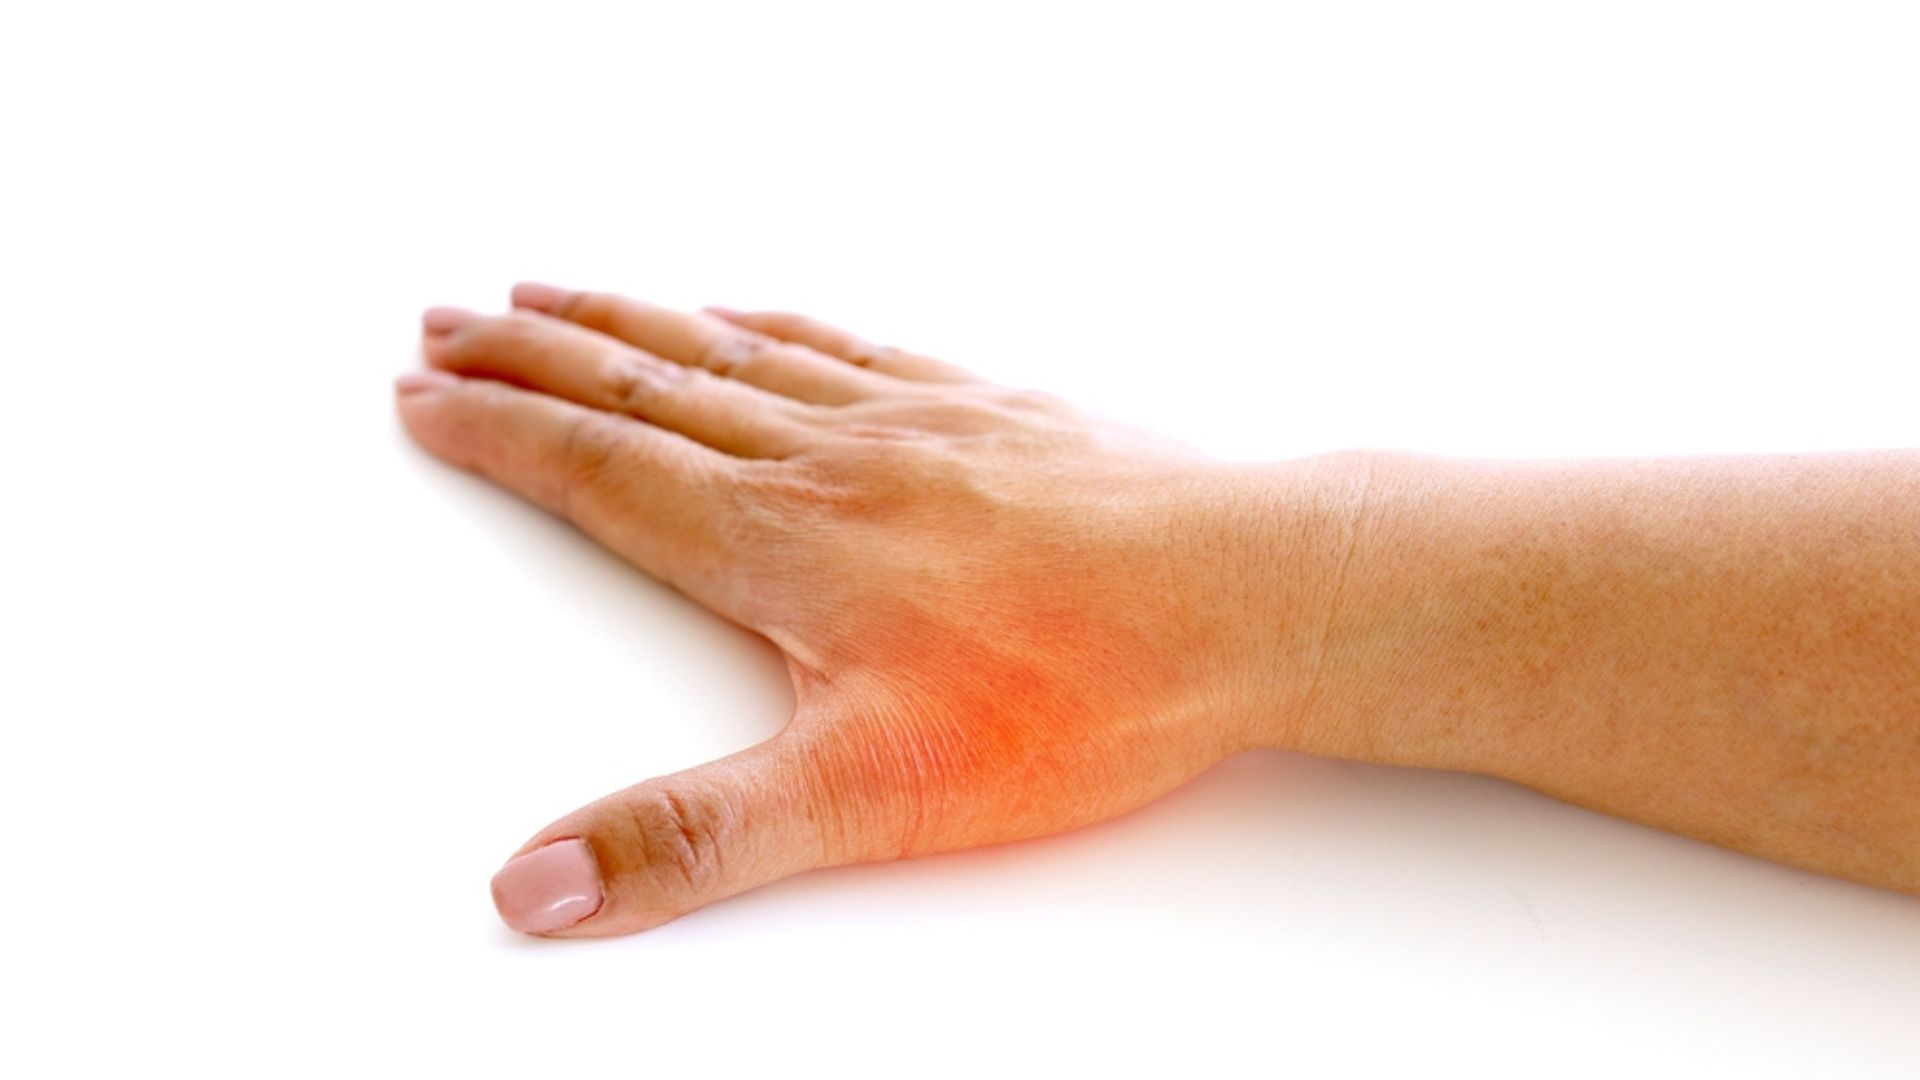 basal thumb arthritis treatment